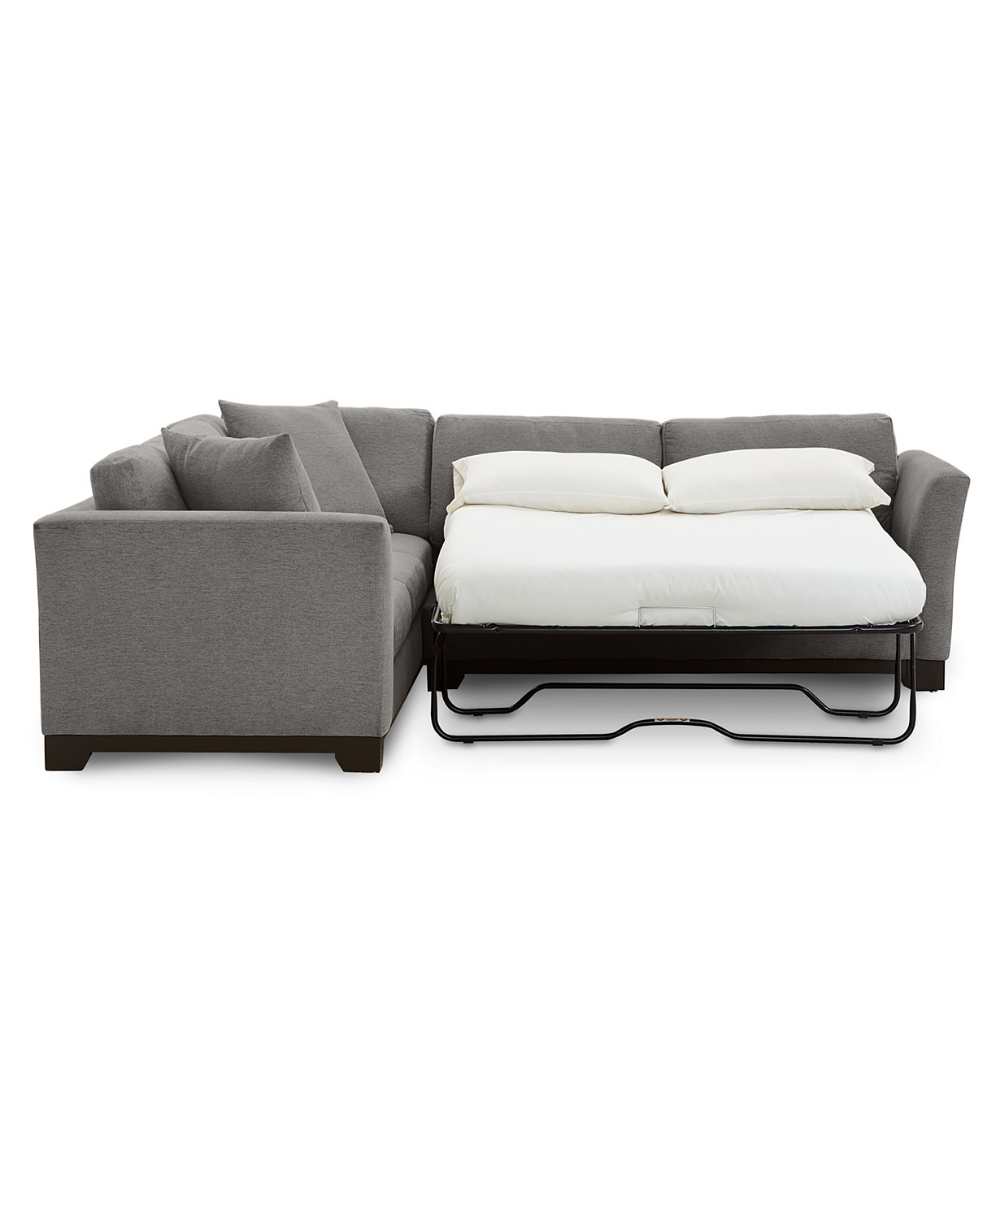 Ikea Sectional Sleeper Sofas